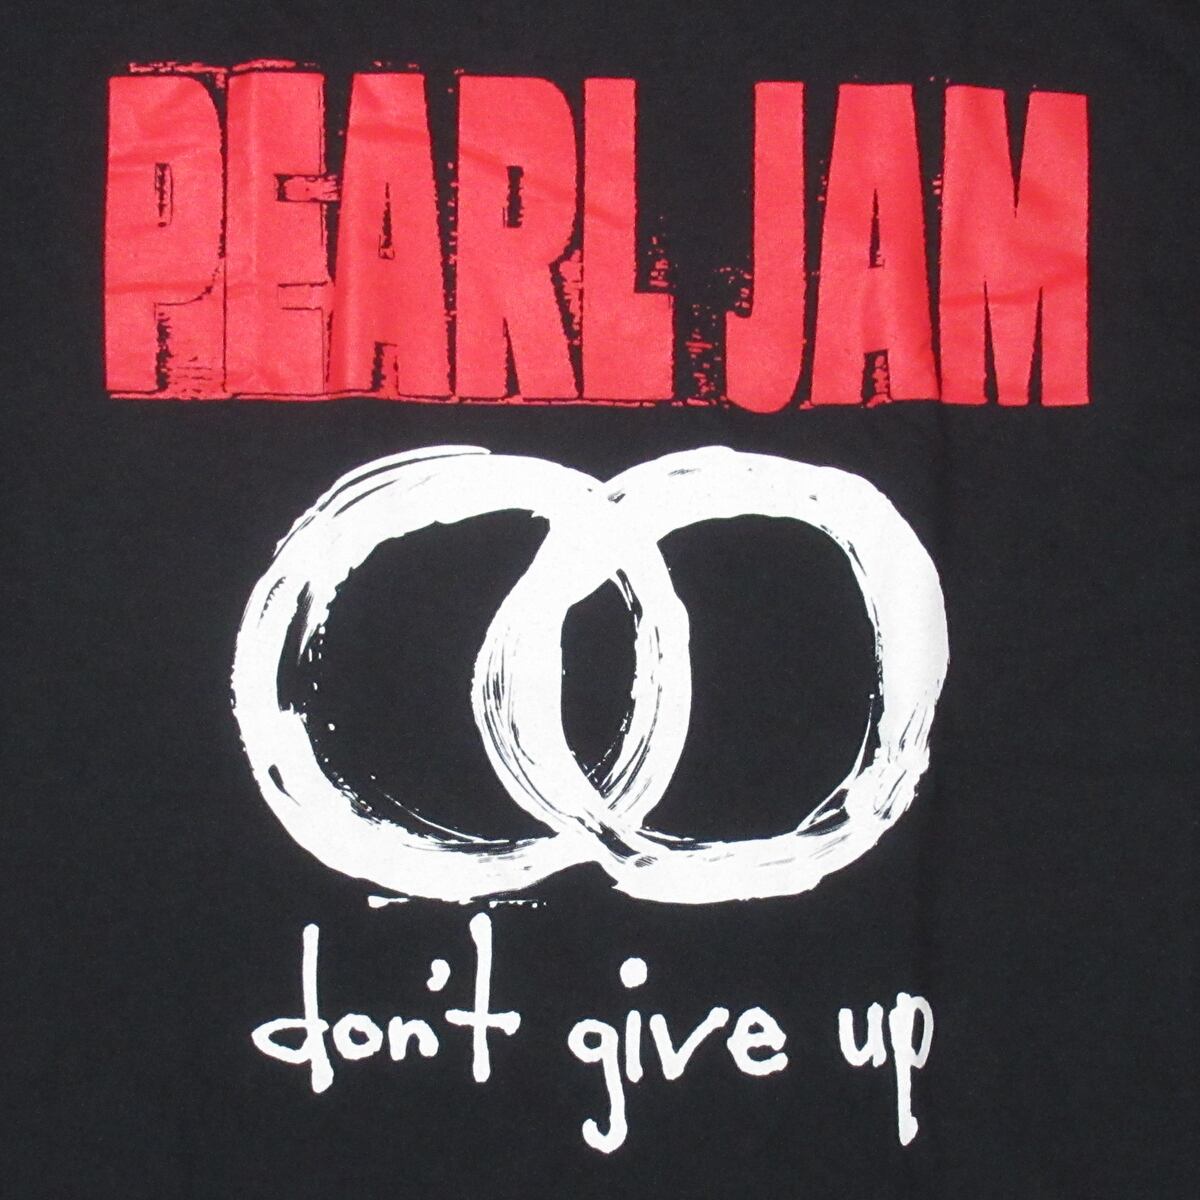 NEIL YOUNG Tシャツ ニールヤング Pearl Jam パールジャム